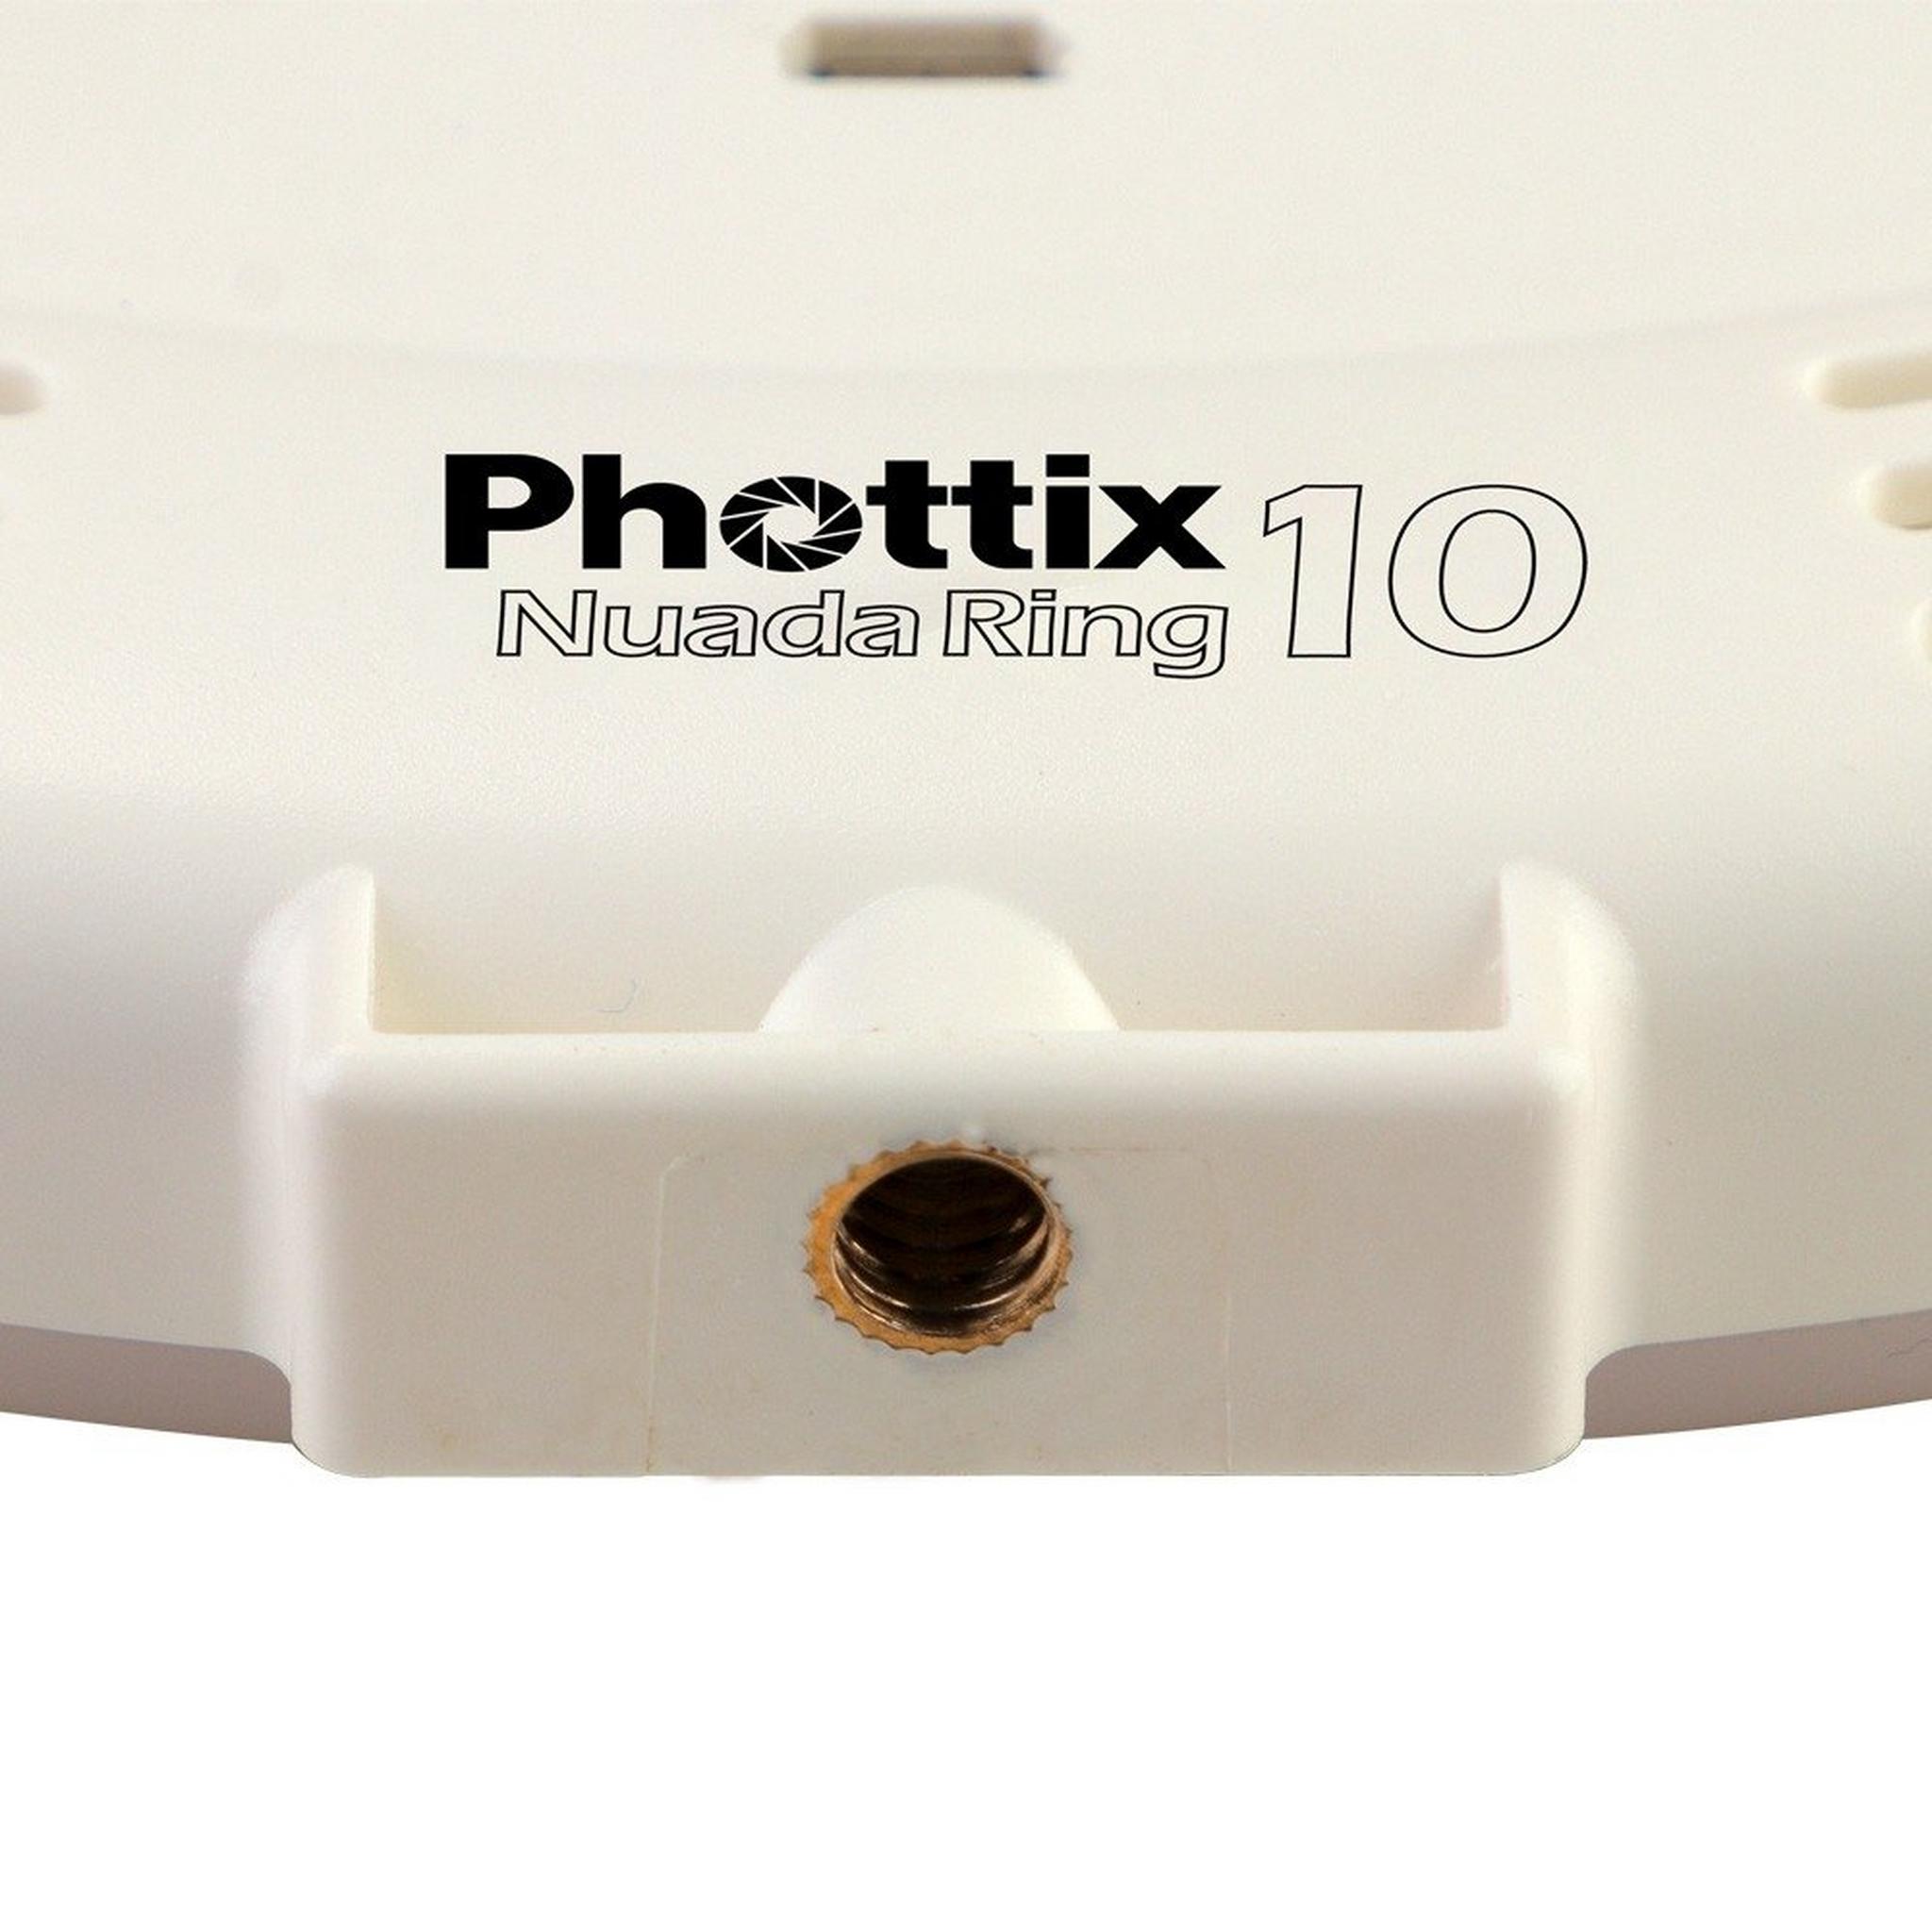 Phottix Nuada Ring10 LED Light